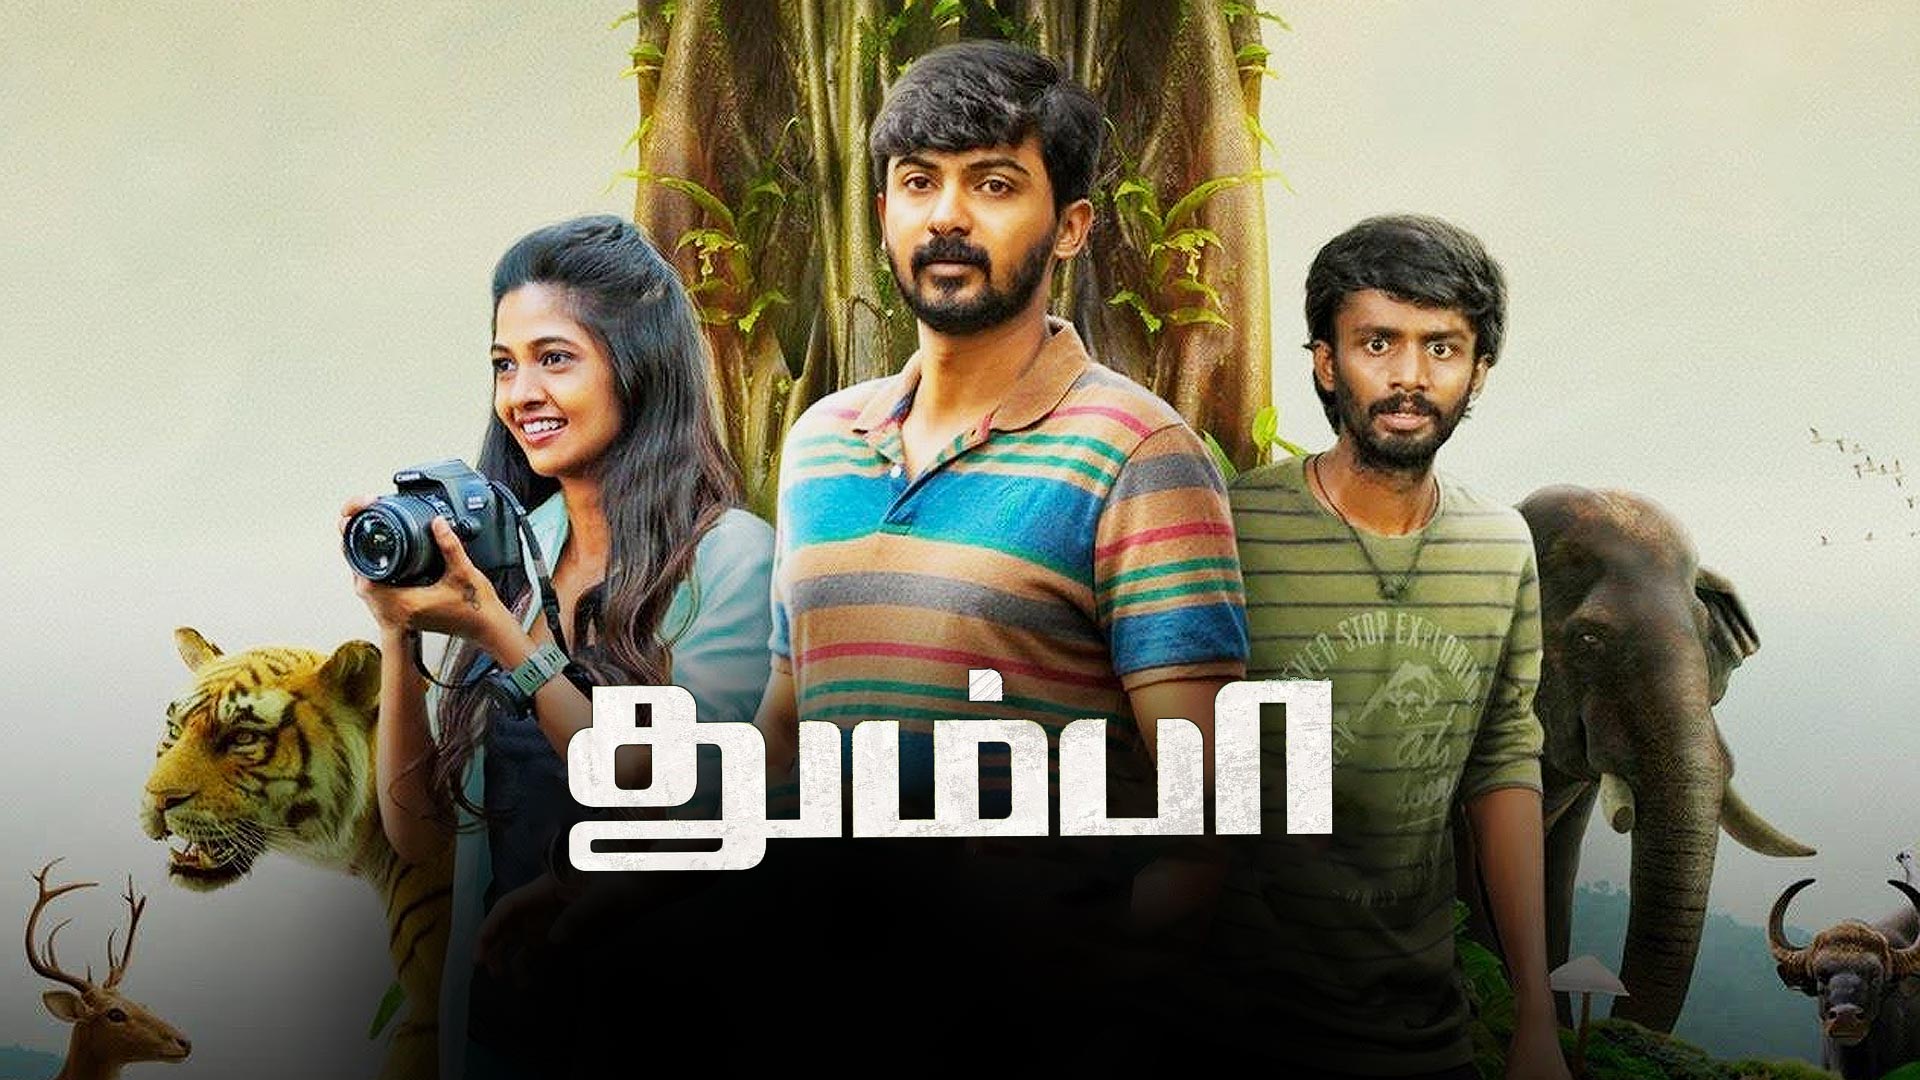 Thumbaa Tamil Full Movie Online | Watch Thumbaa in HD Quality